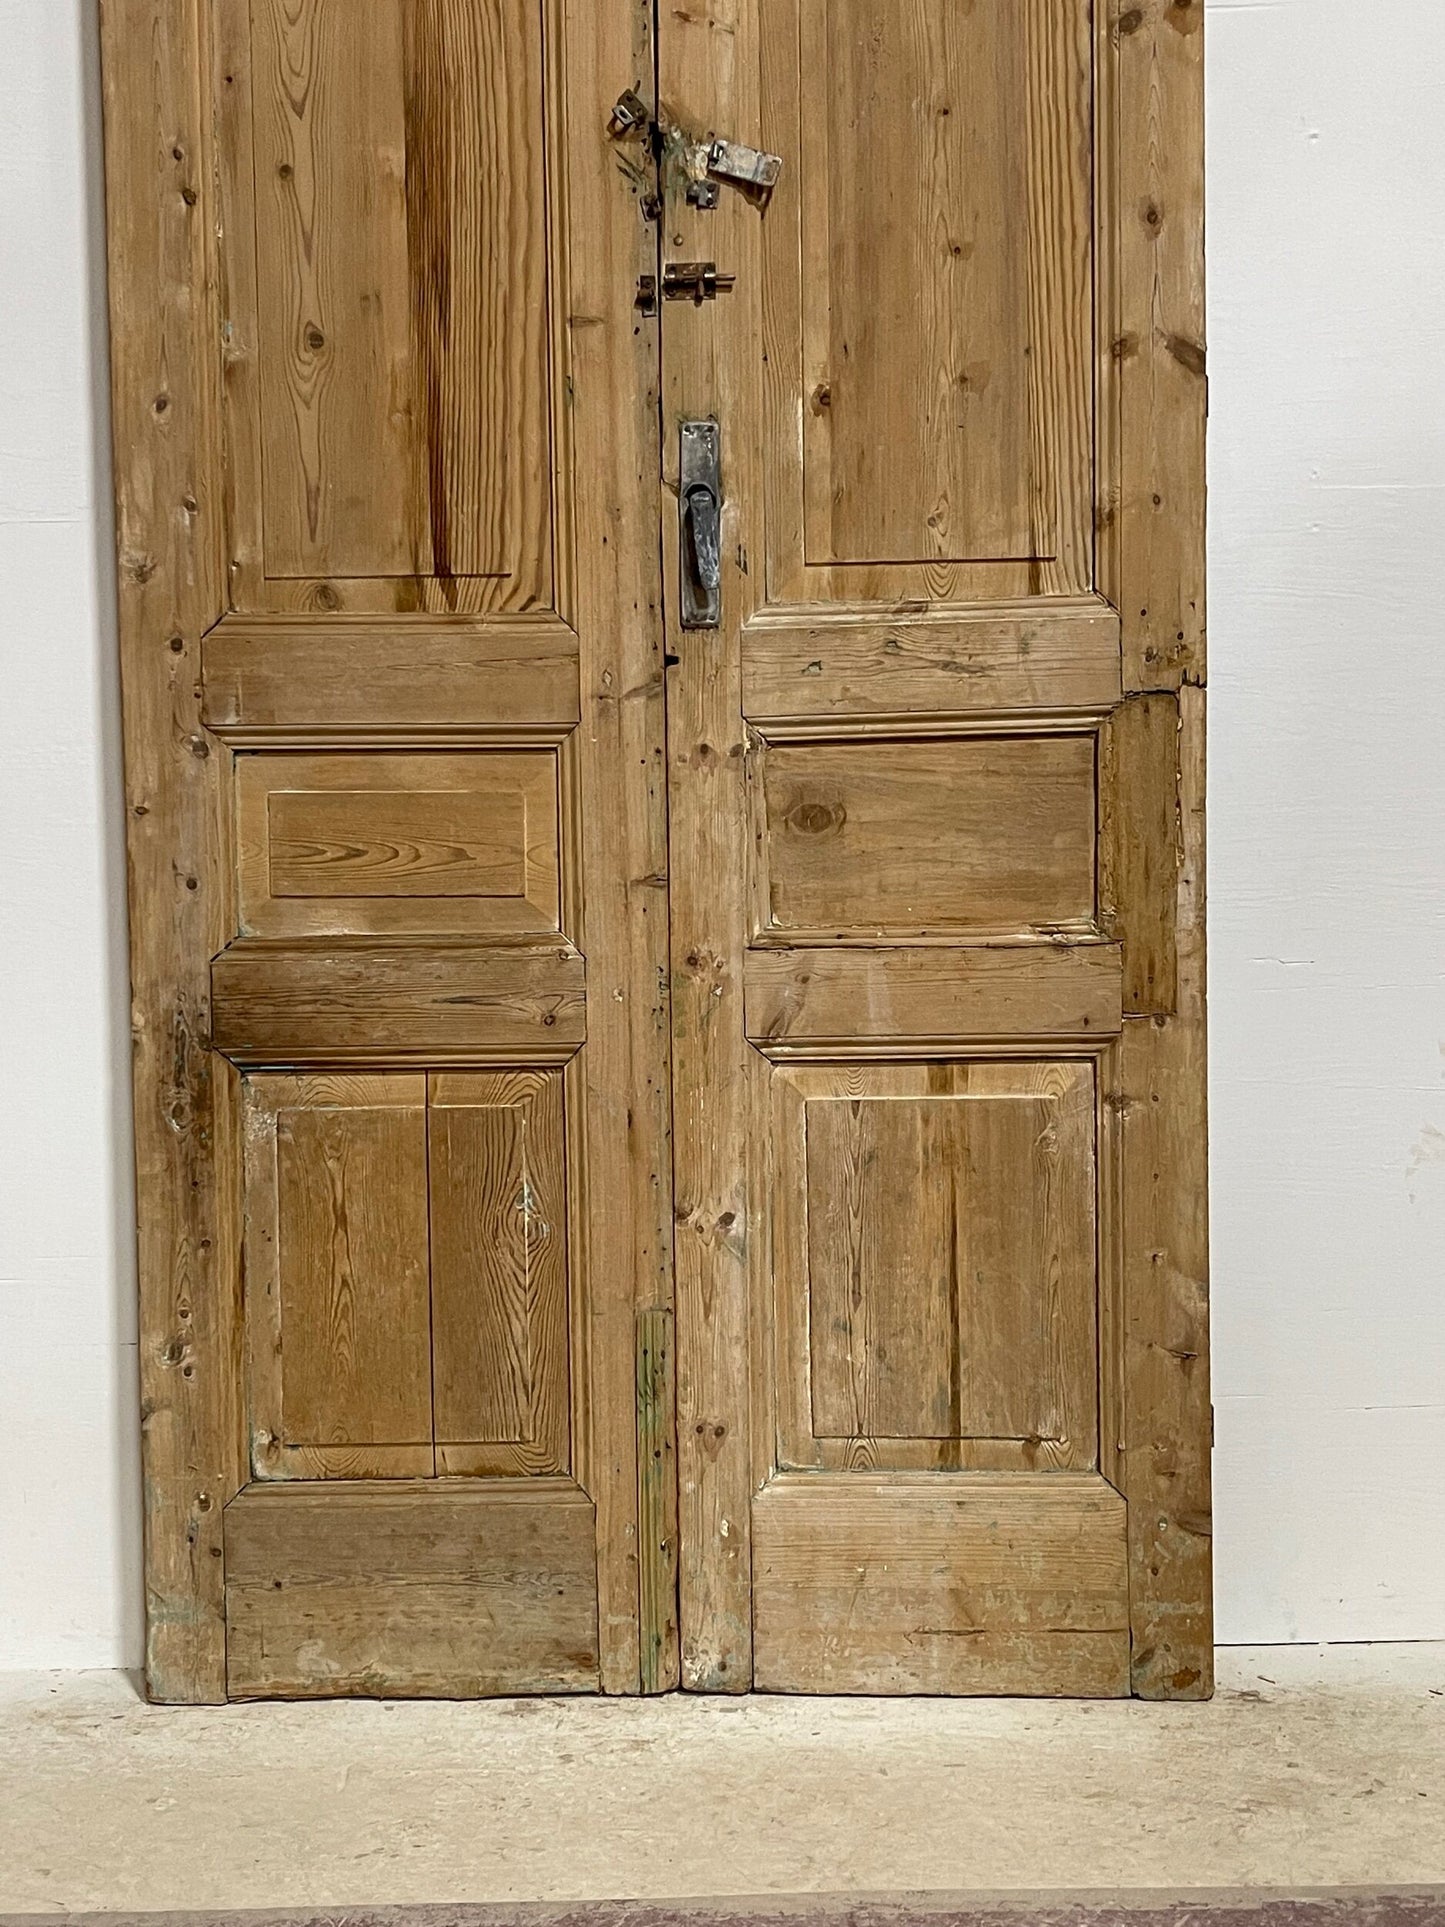 Antique French doors (99.25x43) H0117s